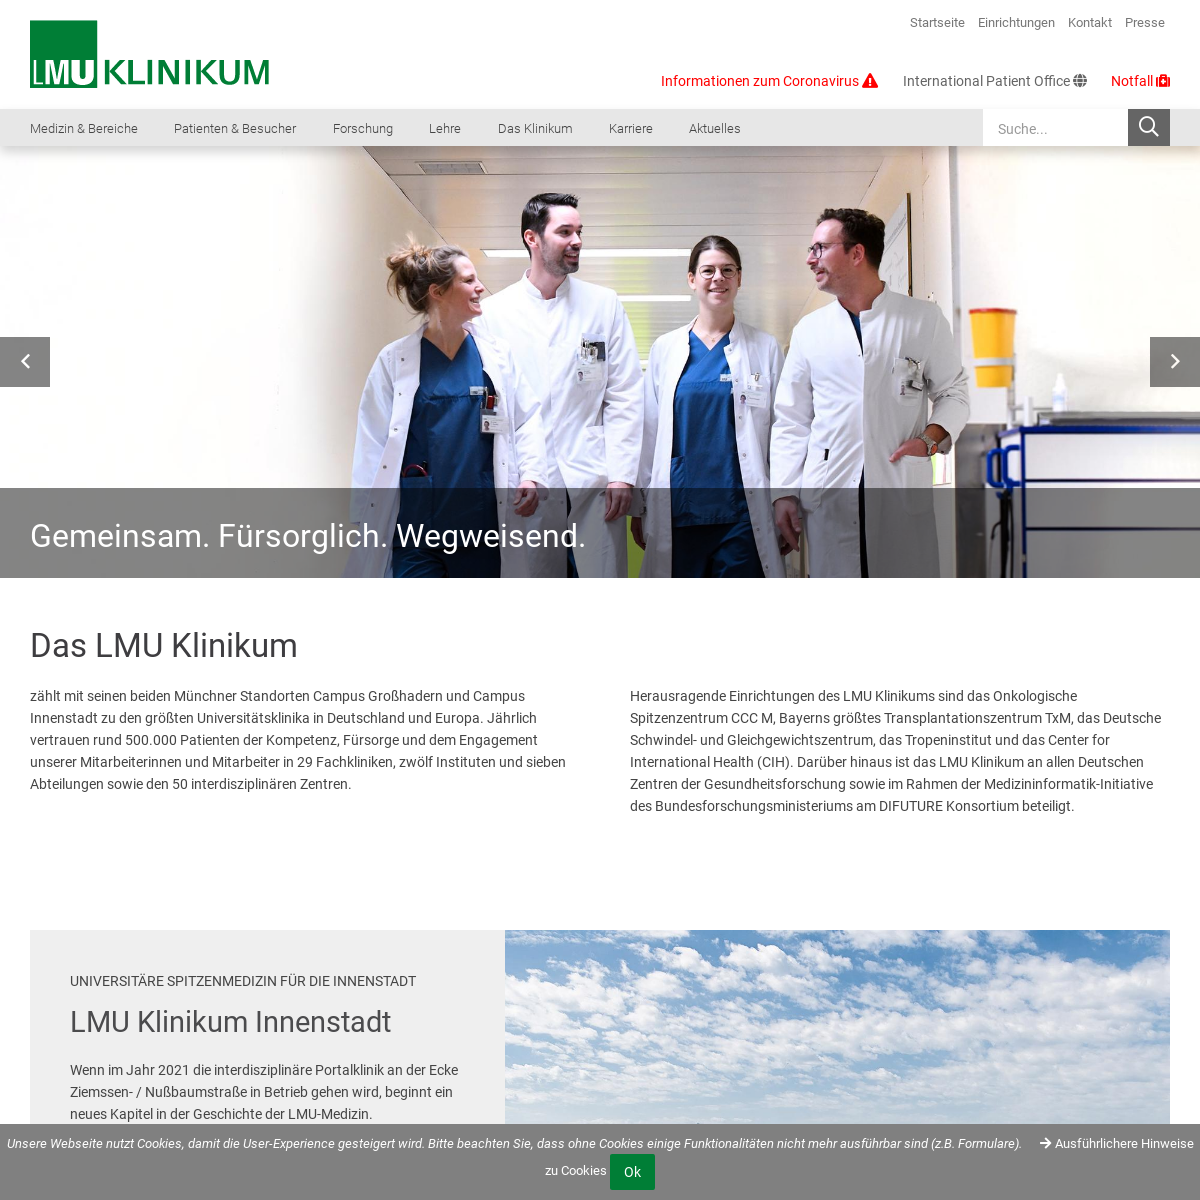 A complete backup of lmu-klinikum.de